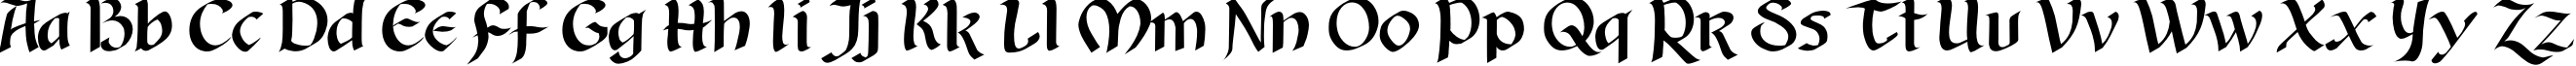 Пример написания английского алфавита шрифтом Vikant TYGRA